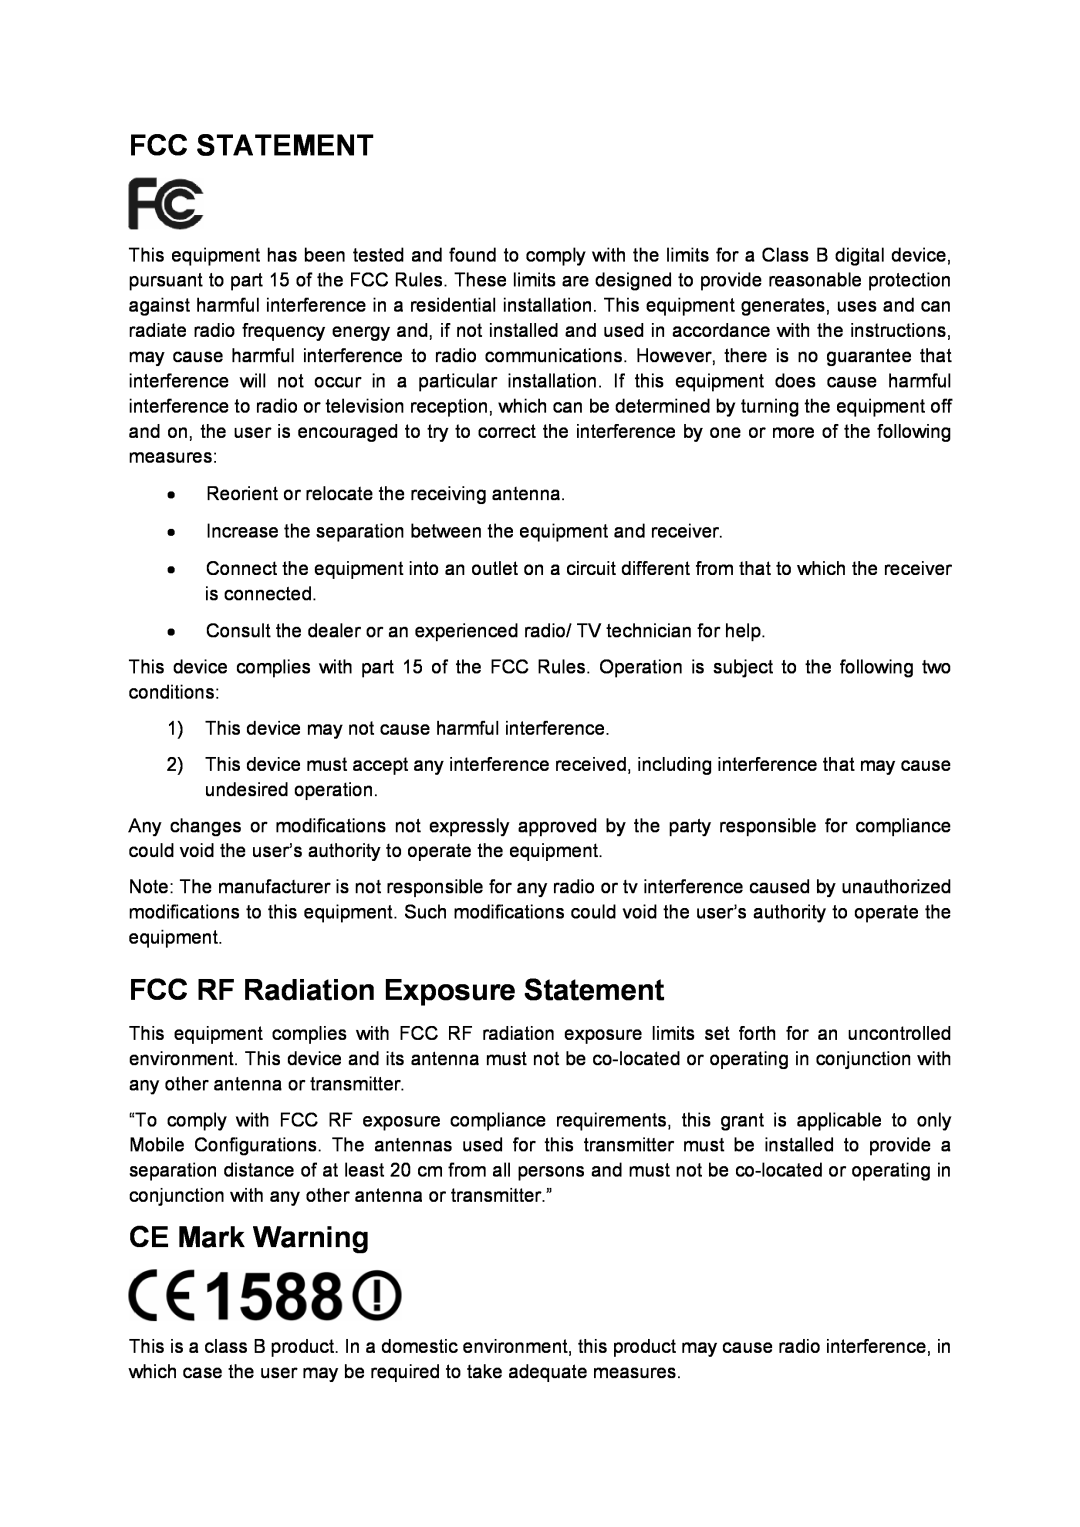 TP-Link TD-W8980 manual Fcc Statement, FCC RF Radiation Exposure Statement, CE Mark Warning 